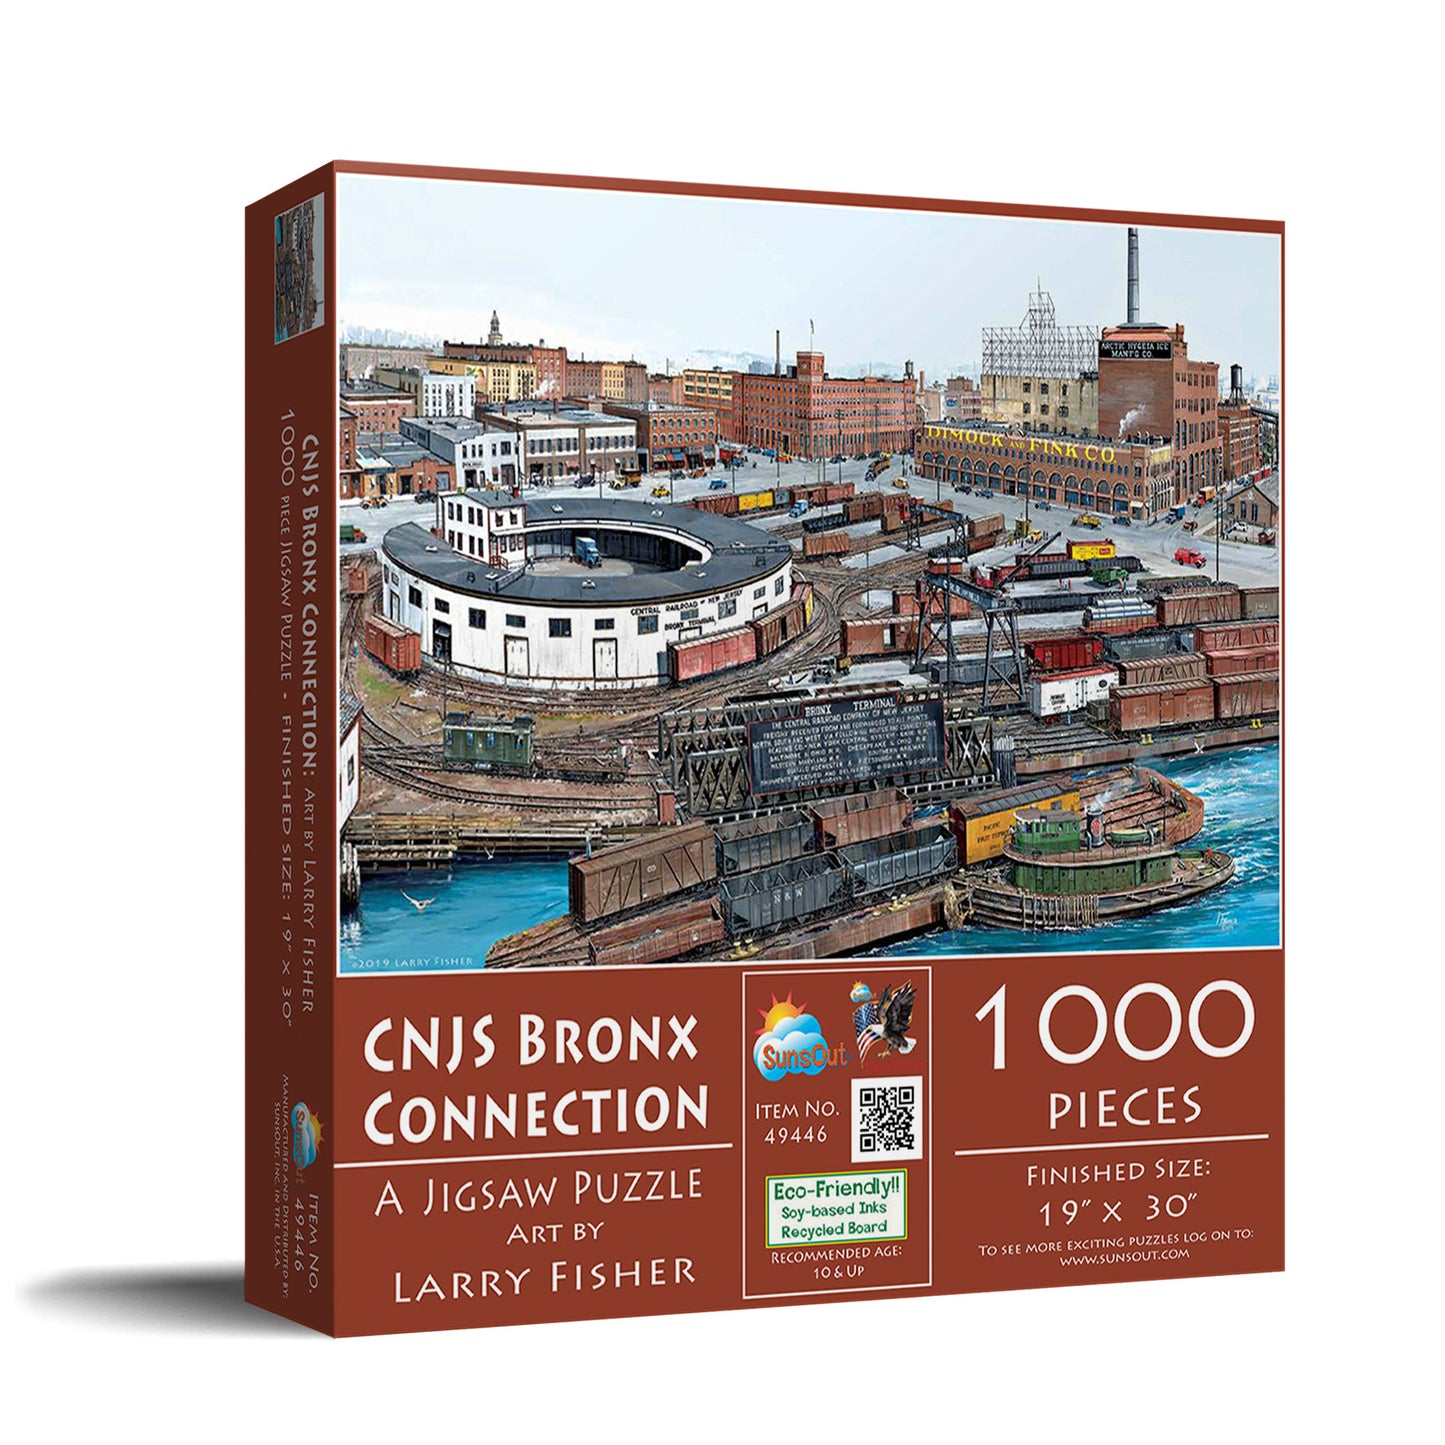 CNJX Bronx Connection - 1000 Piece Jigsaw Puzzle